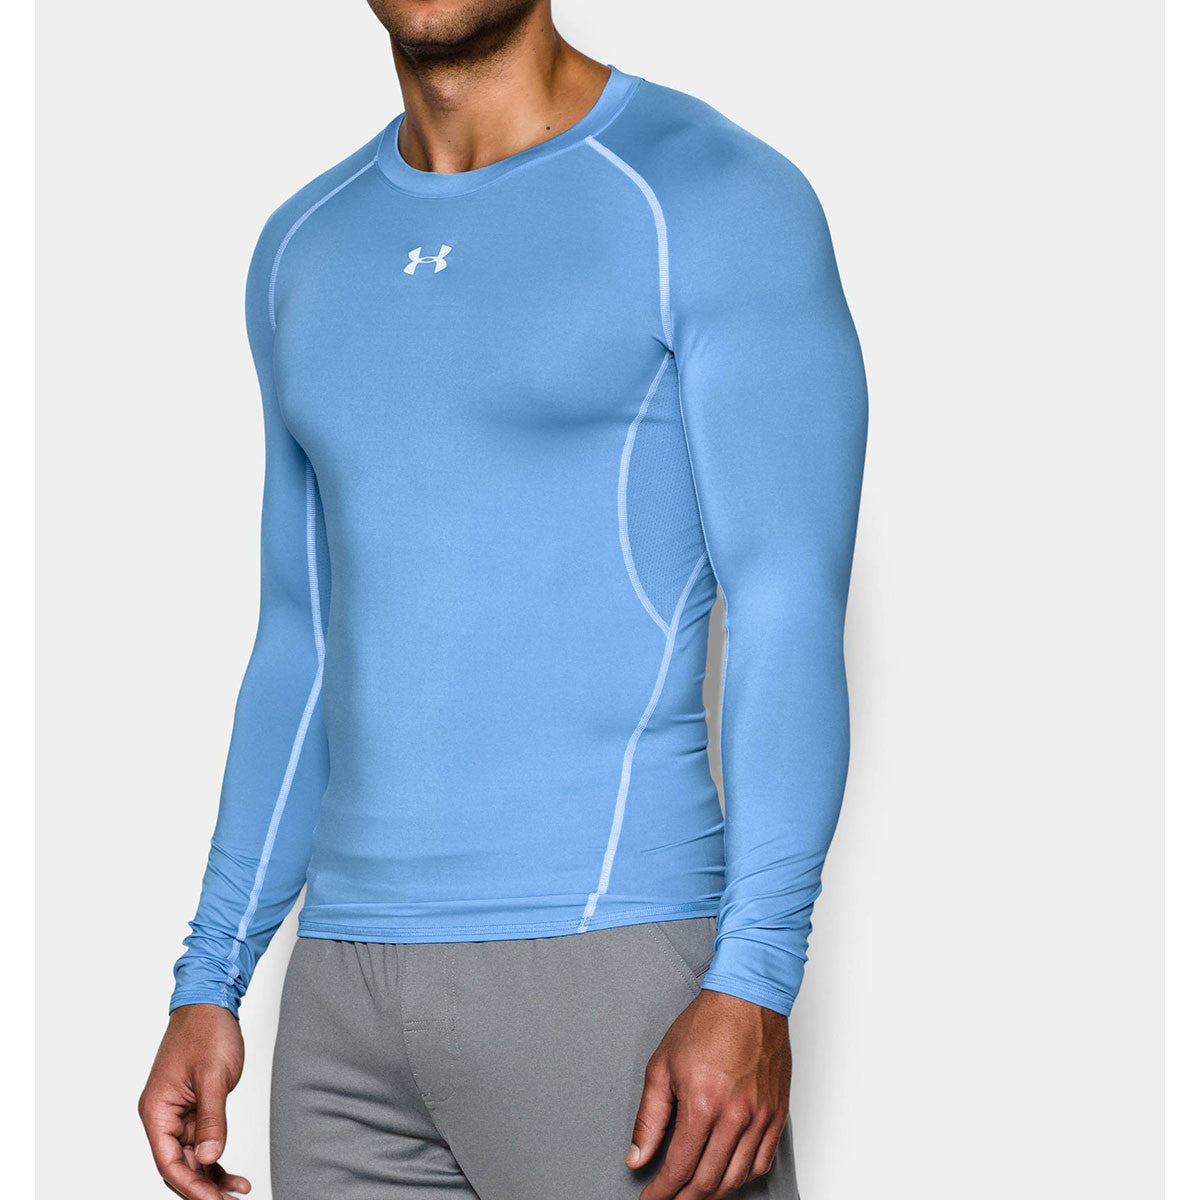 Under Armour Heat Gear Hopkins Blue Jays T-Shirt